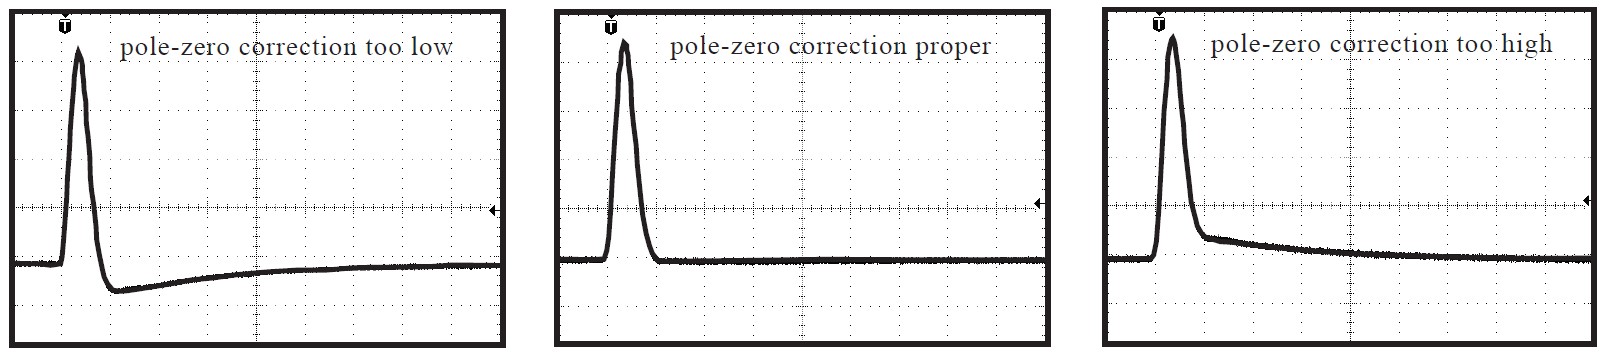 pole-zero-adjustment